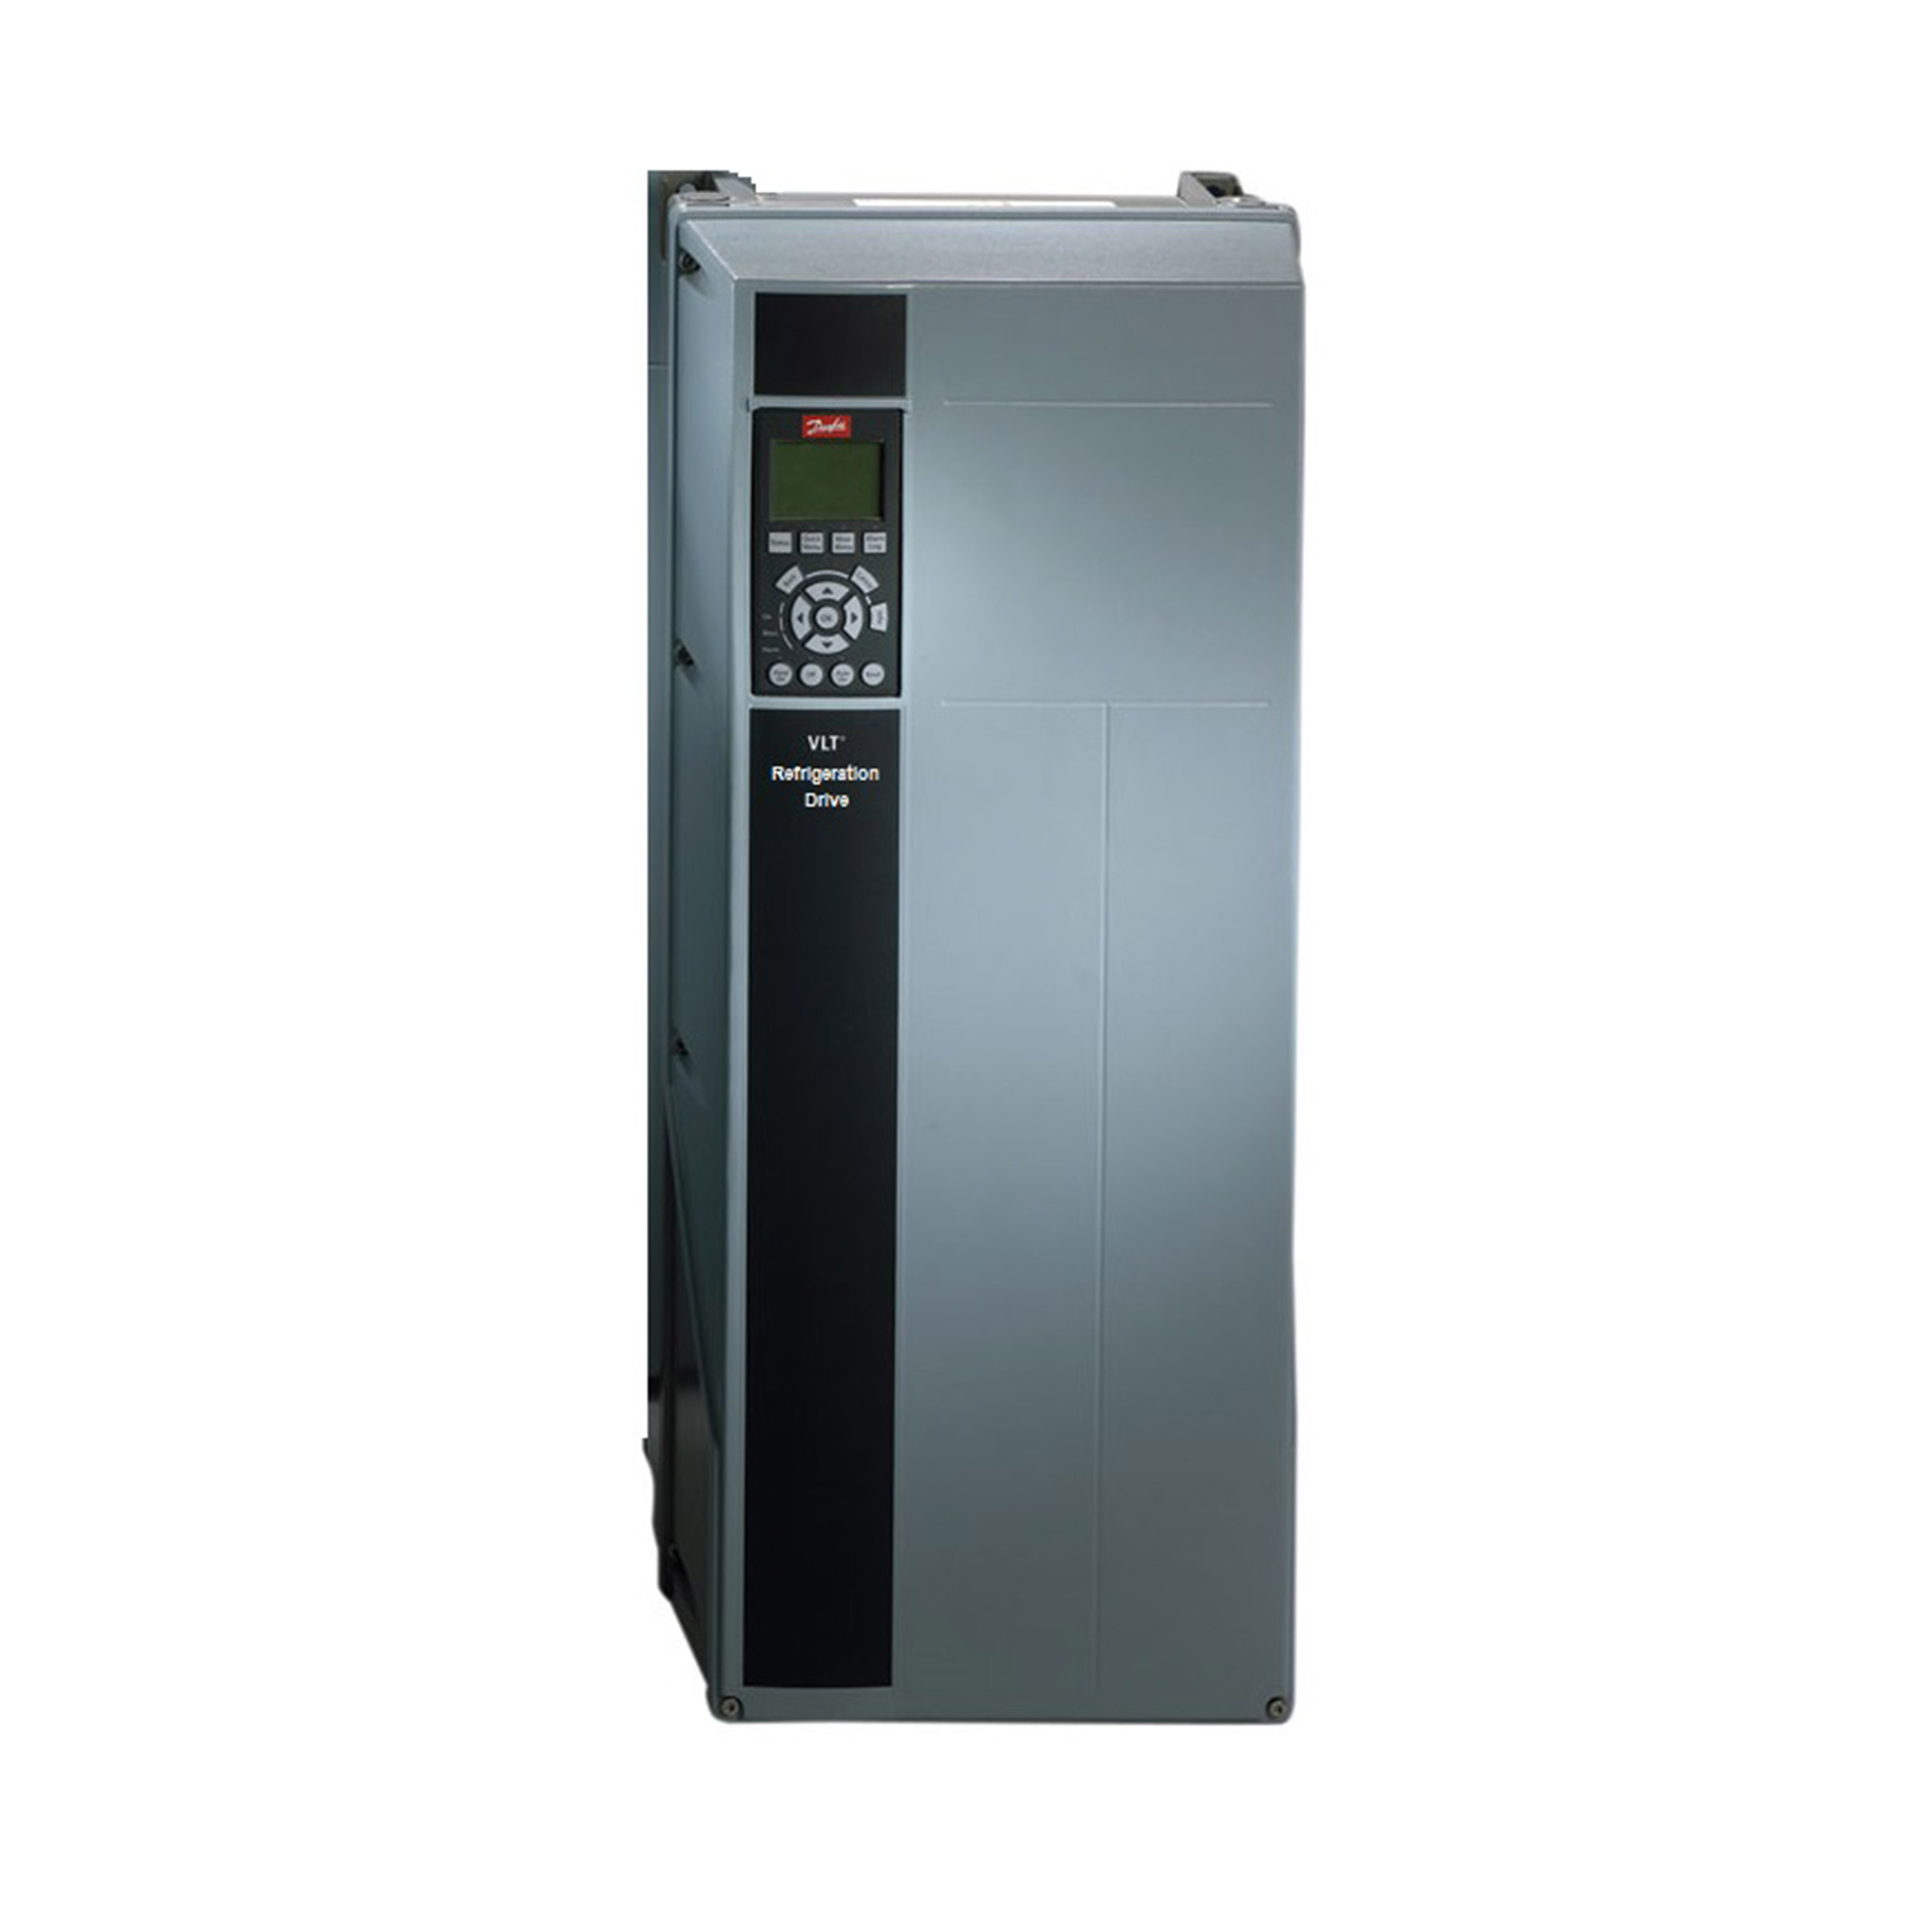 134F8739 VLT Refrigeration Drive FC 103